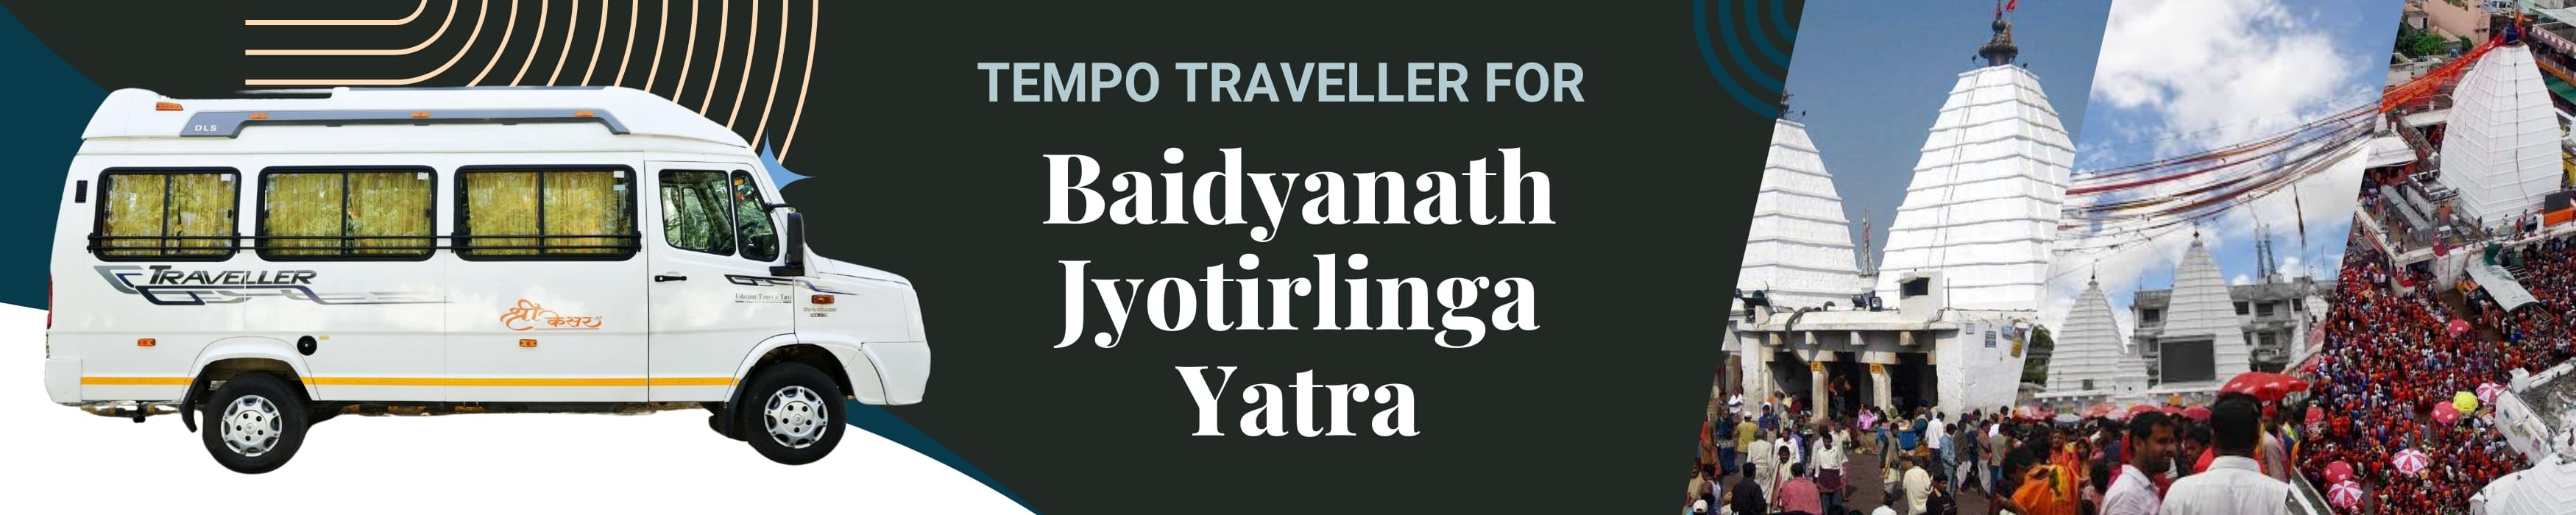 Hire a Tempo Traveller For Baidyanath Jyotirlinga Yatra 